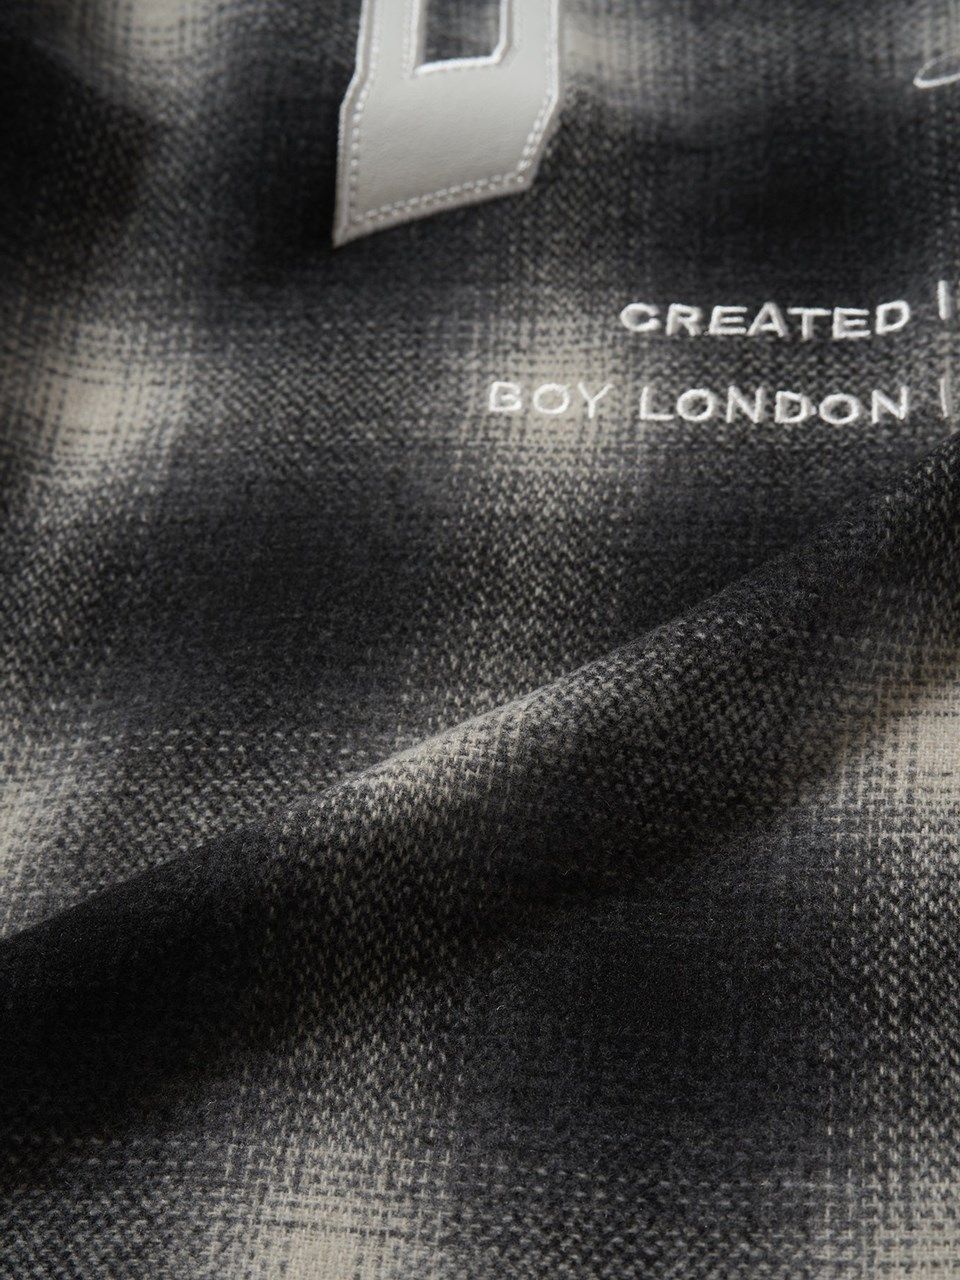 BOY LONDON - PATCH LOGO Embroidery Check Shirt / シャツ / ブラック